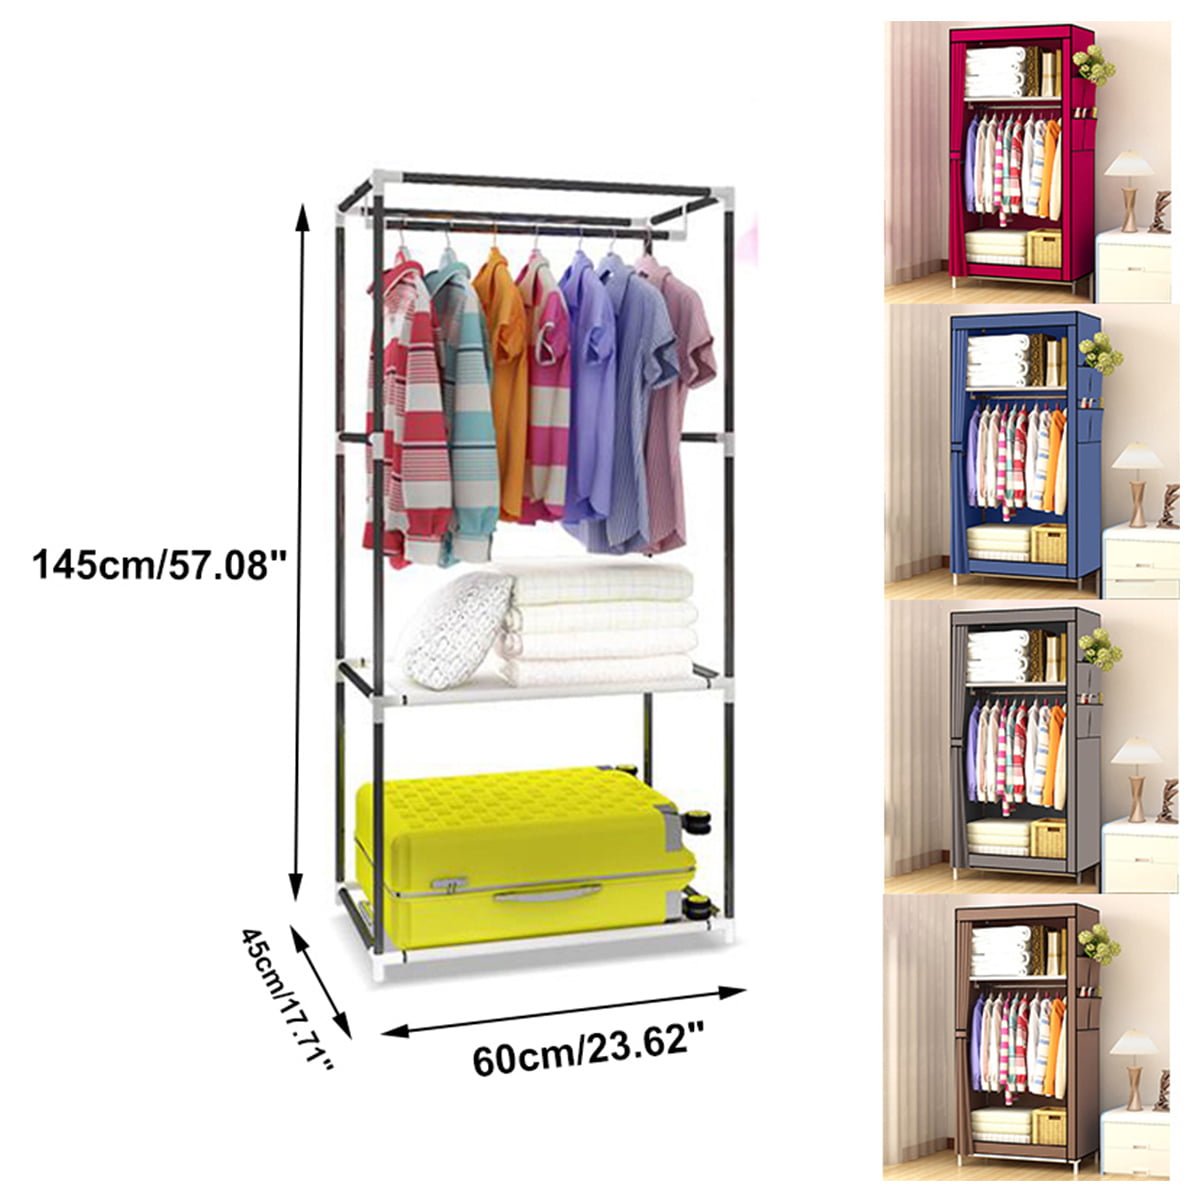 Folding Fabric Single Canvas Wardrobe Shelves Clothes Storage Organiser Wardrobe Cupboard Closets with Hanging Rail for Bedroom Dormitory,43x58x156cm lyrlody Single Wardrobe 